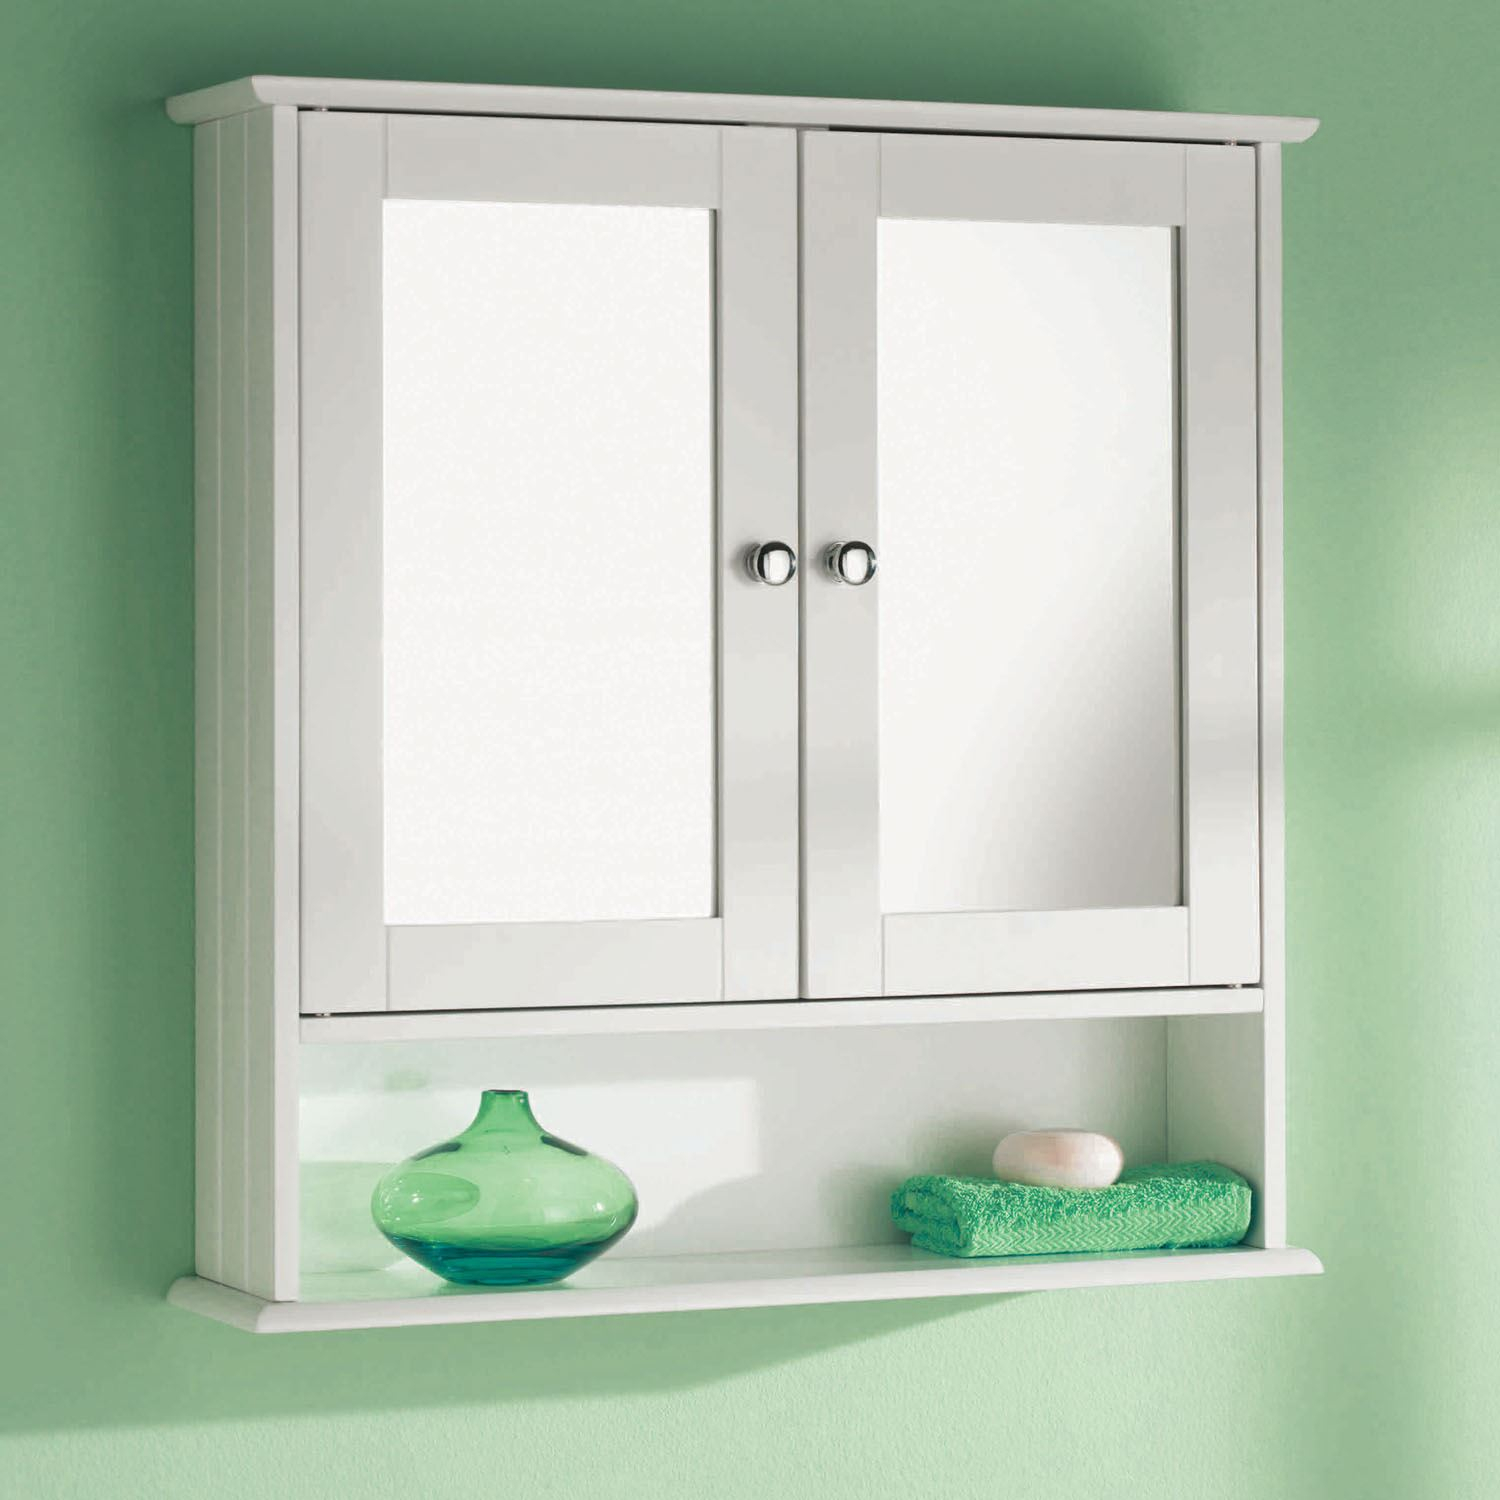 Double Door Mirror Shelf Wall Mounted Wood Storage Bathroom for proportions 1500 X 1500